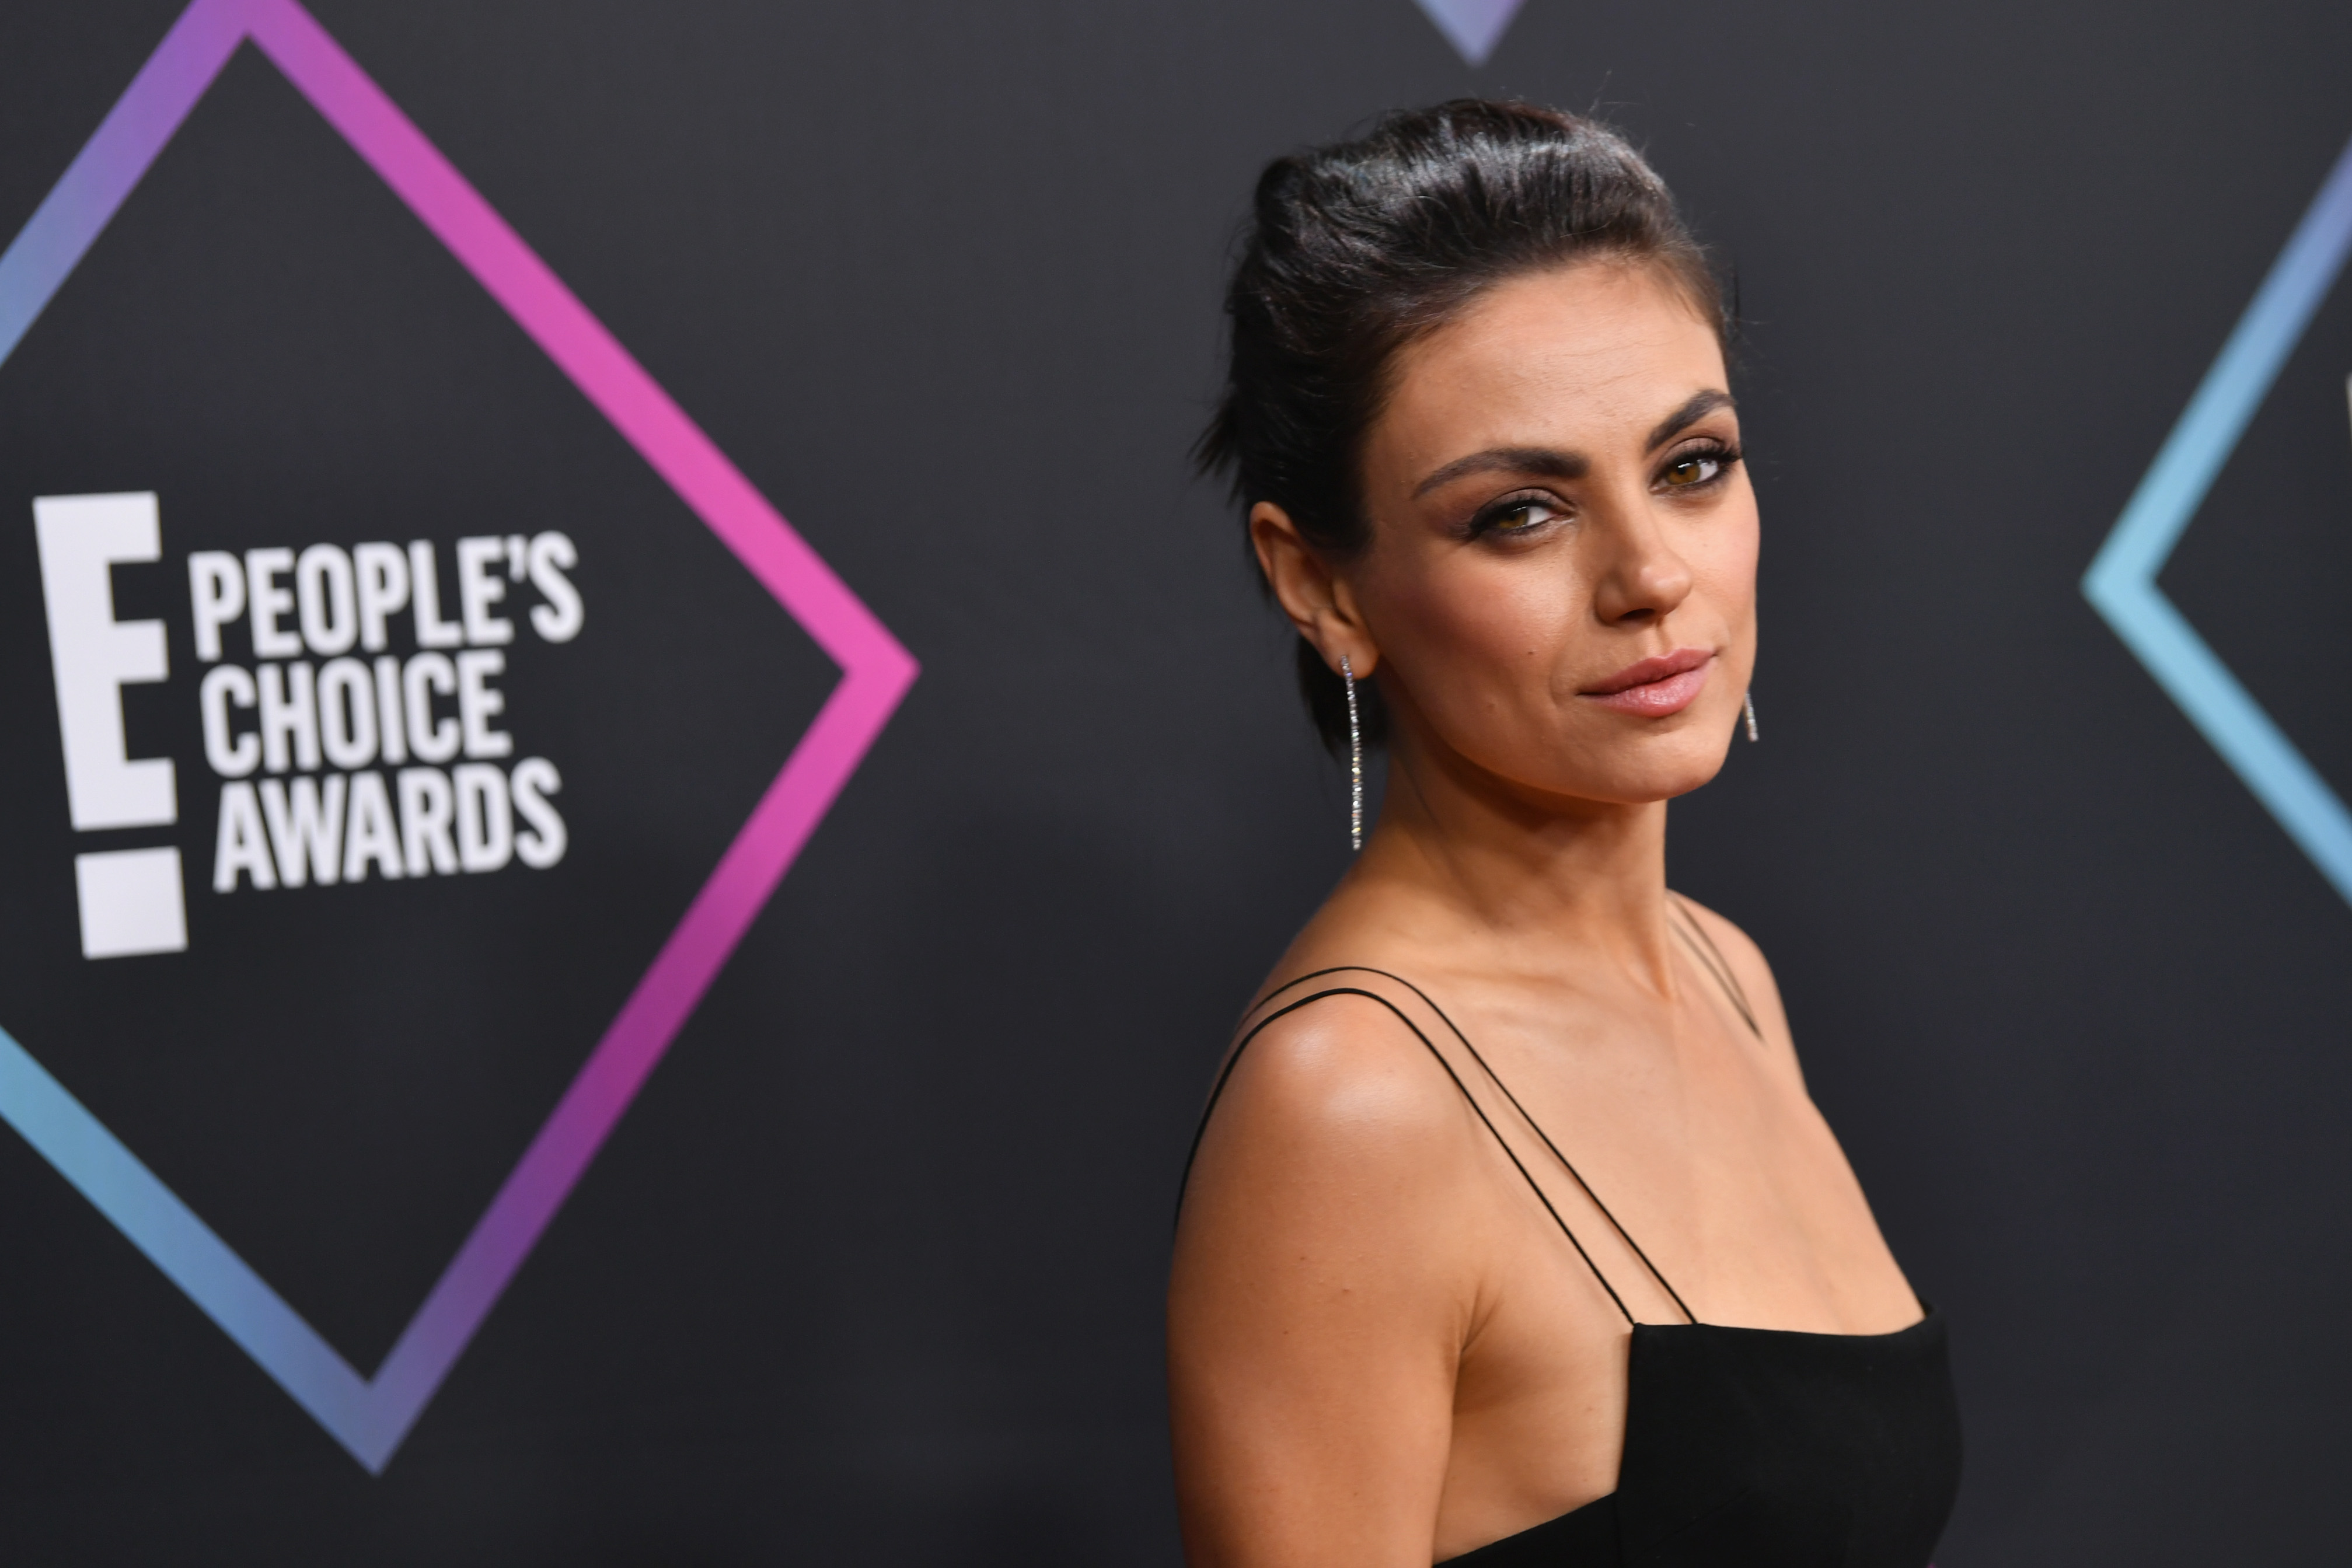 Mila Kunis arrives to the 2018 E! People's Choice Awards